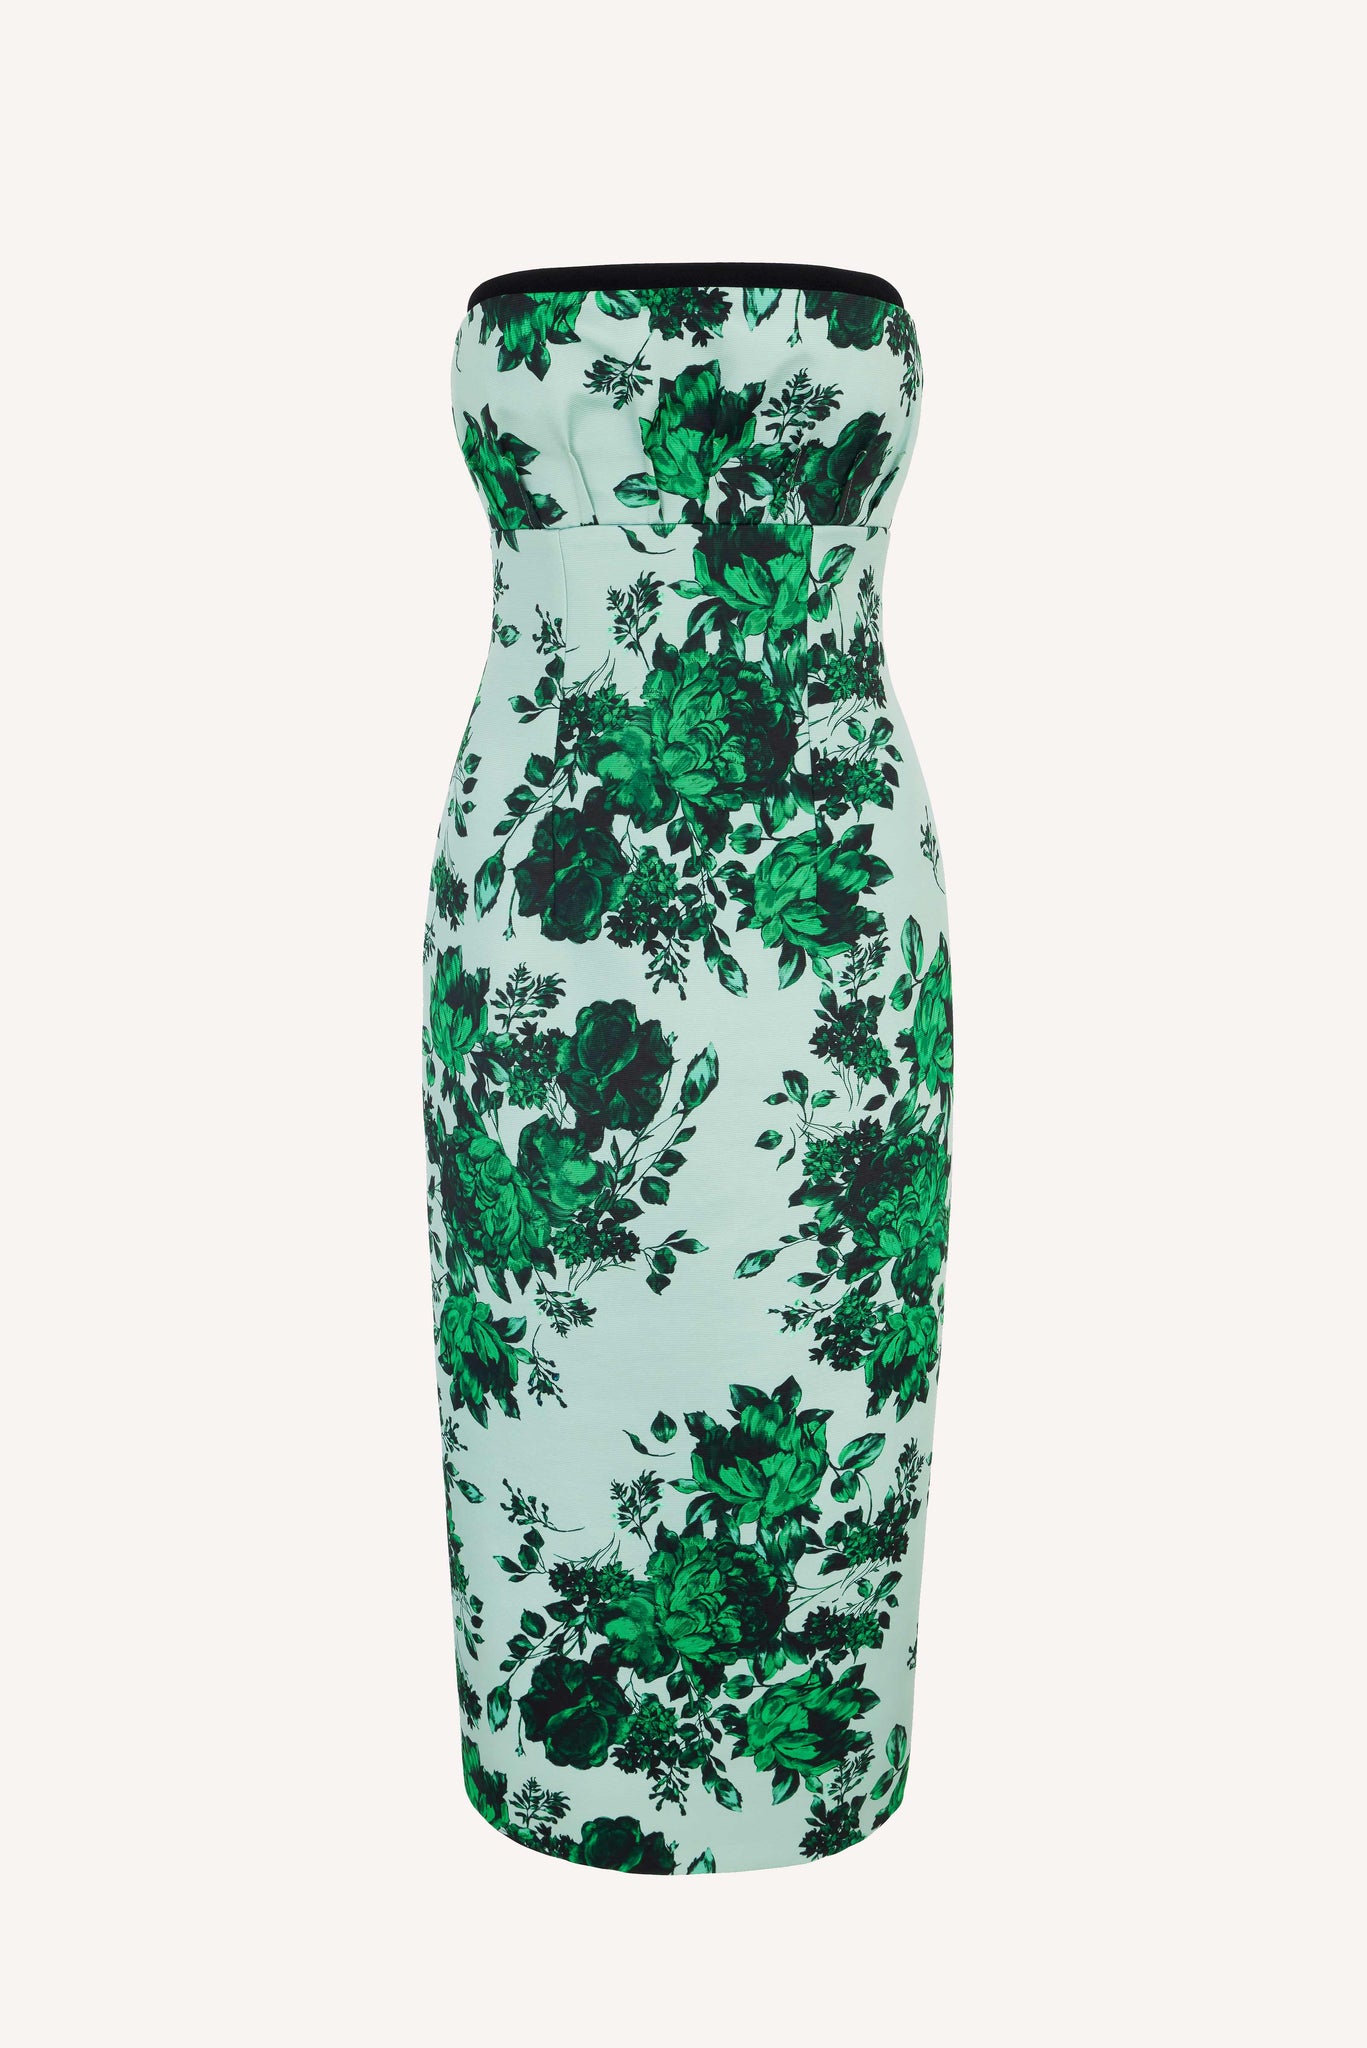 Adalina Strapless Dress in Green Festive Bouquet Printed Taffeta Faille